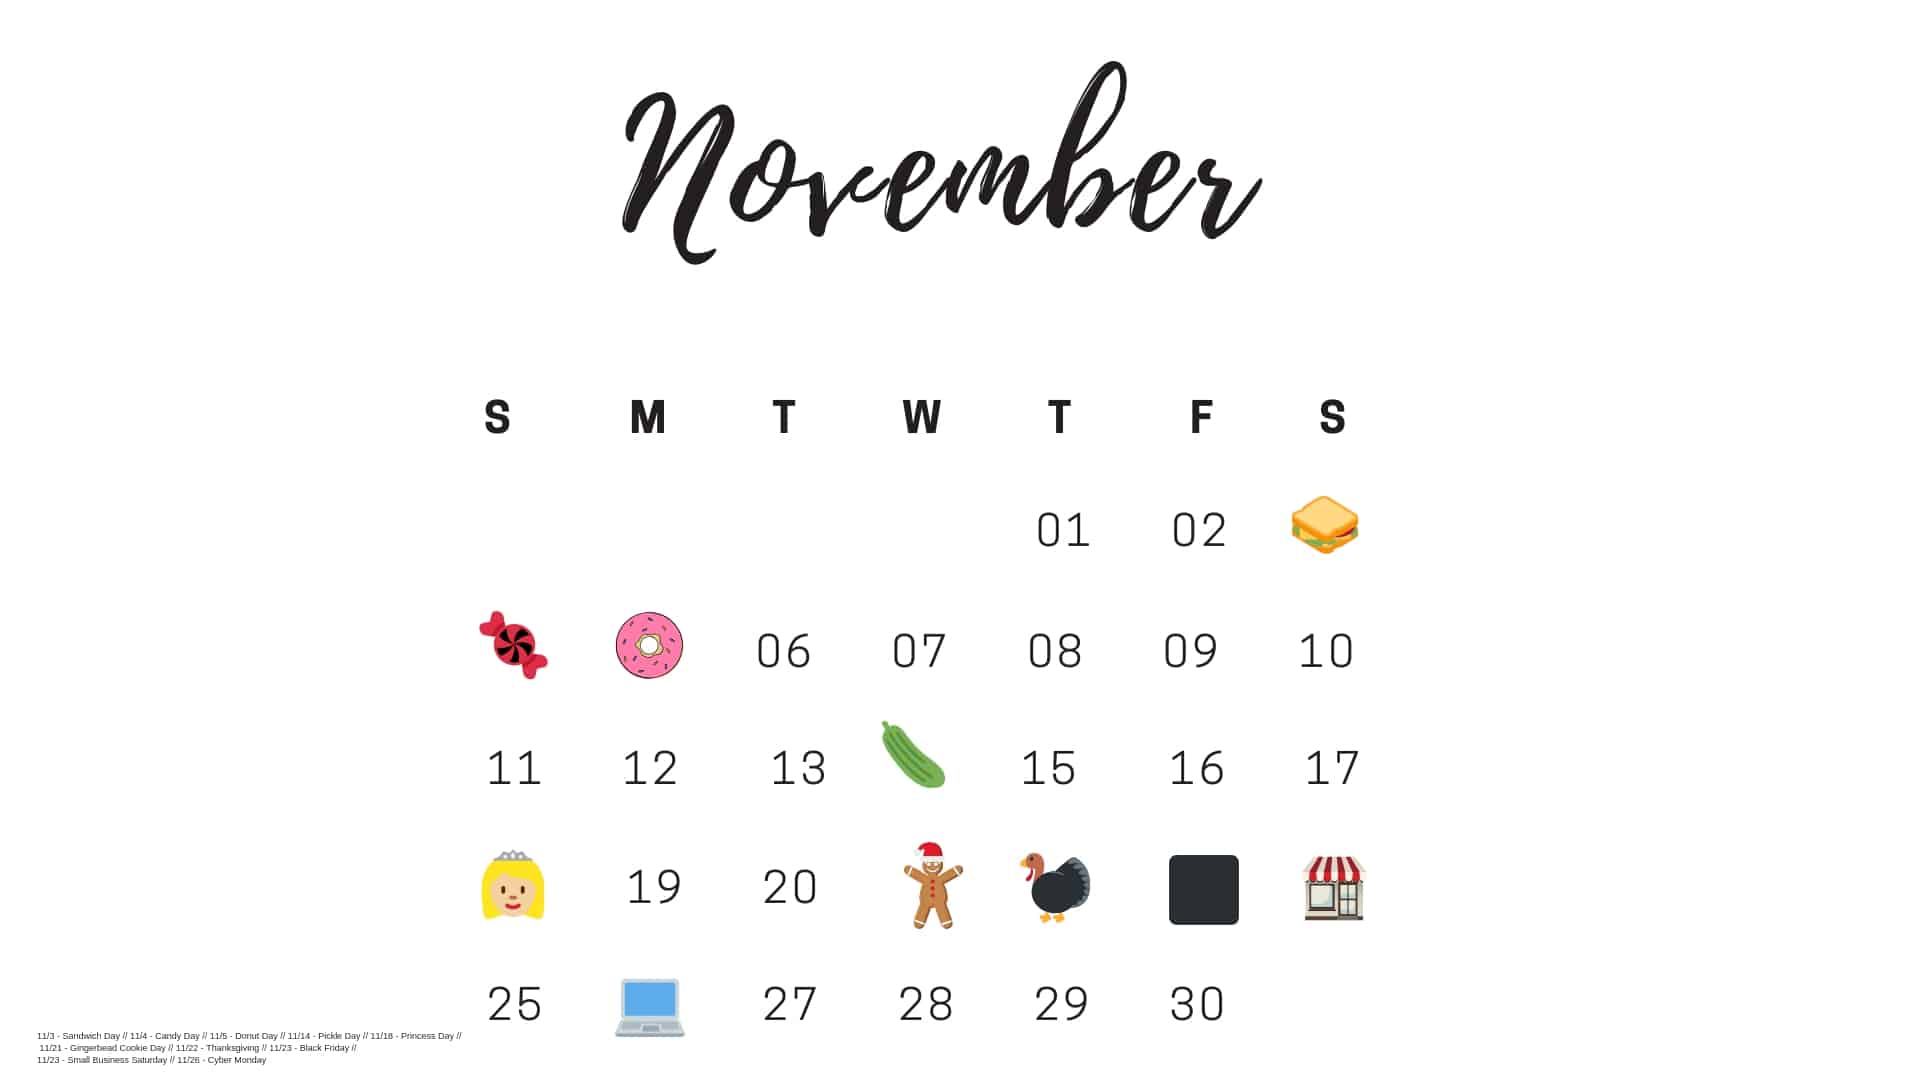 November National Days Calendar 